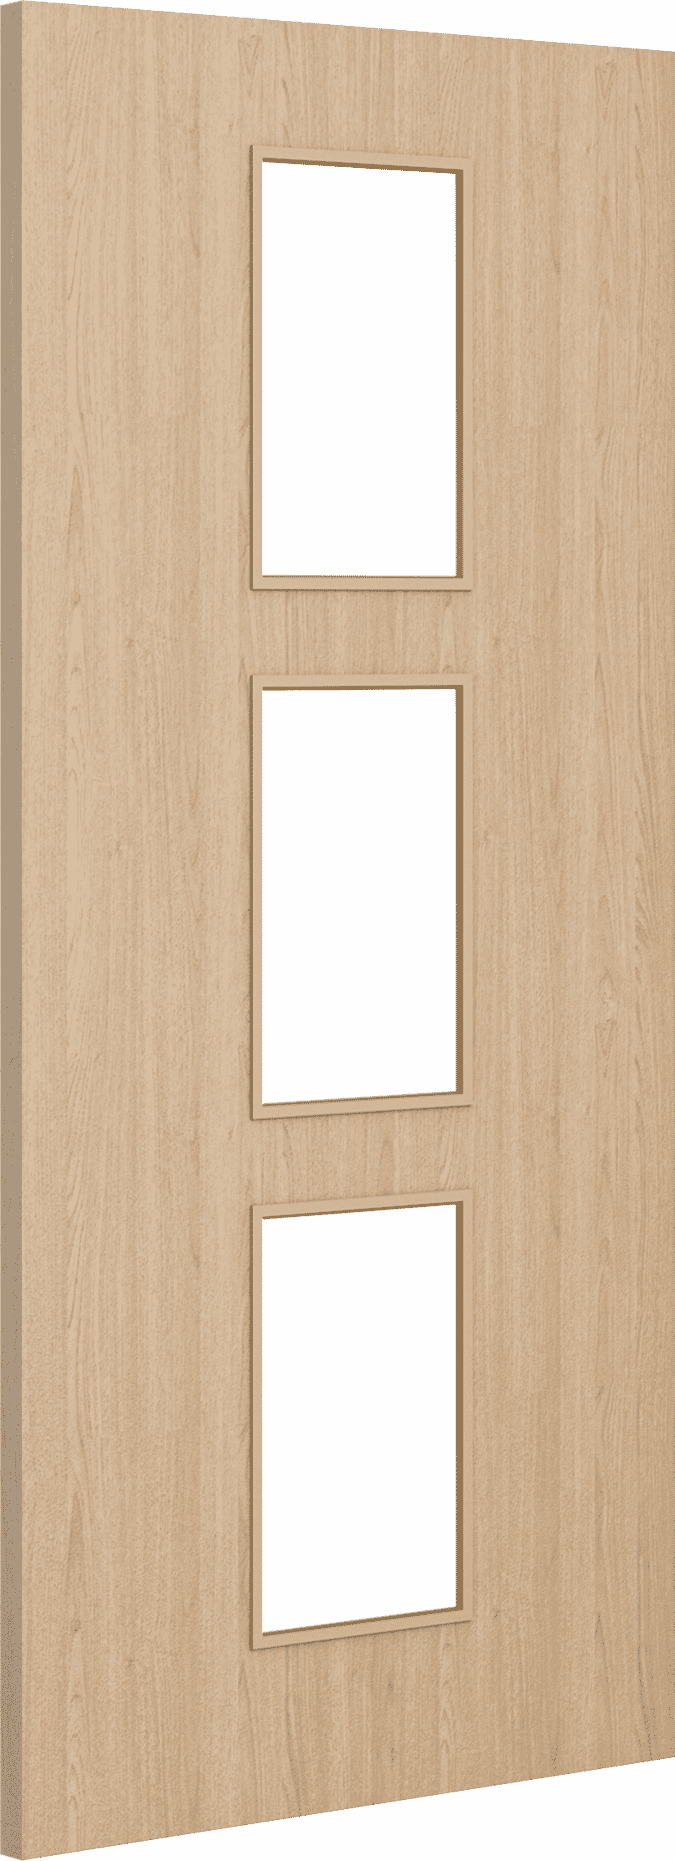 1981mm x 610mm x 44mm (24") Architectural Oak 11 Frosted Glazed - Prefinished FD30 Fire Door Blank